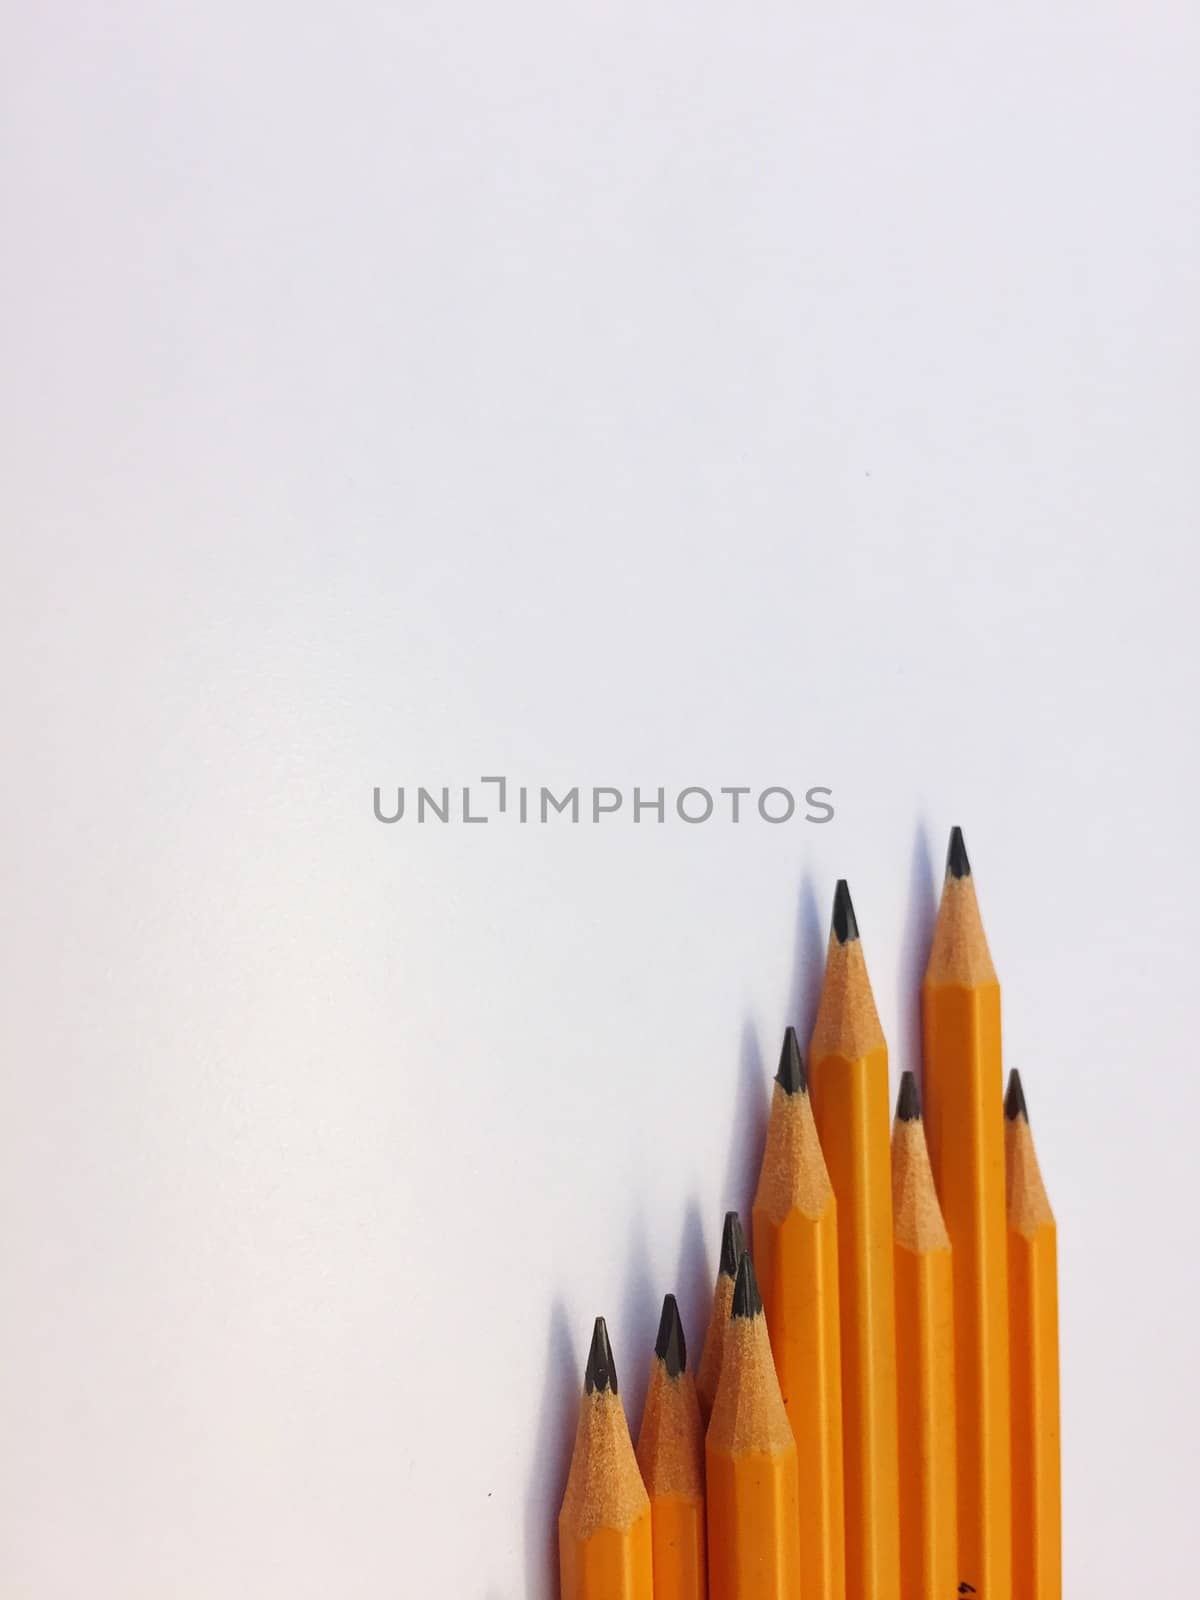 Group of yellow pencils by rarrarorro